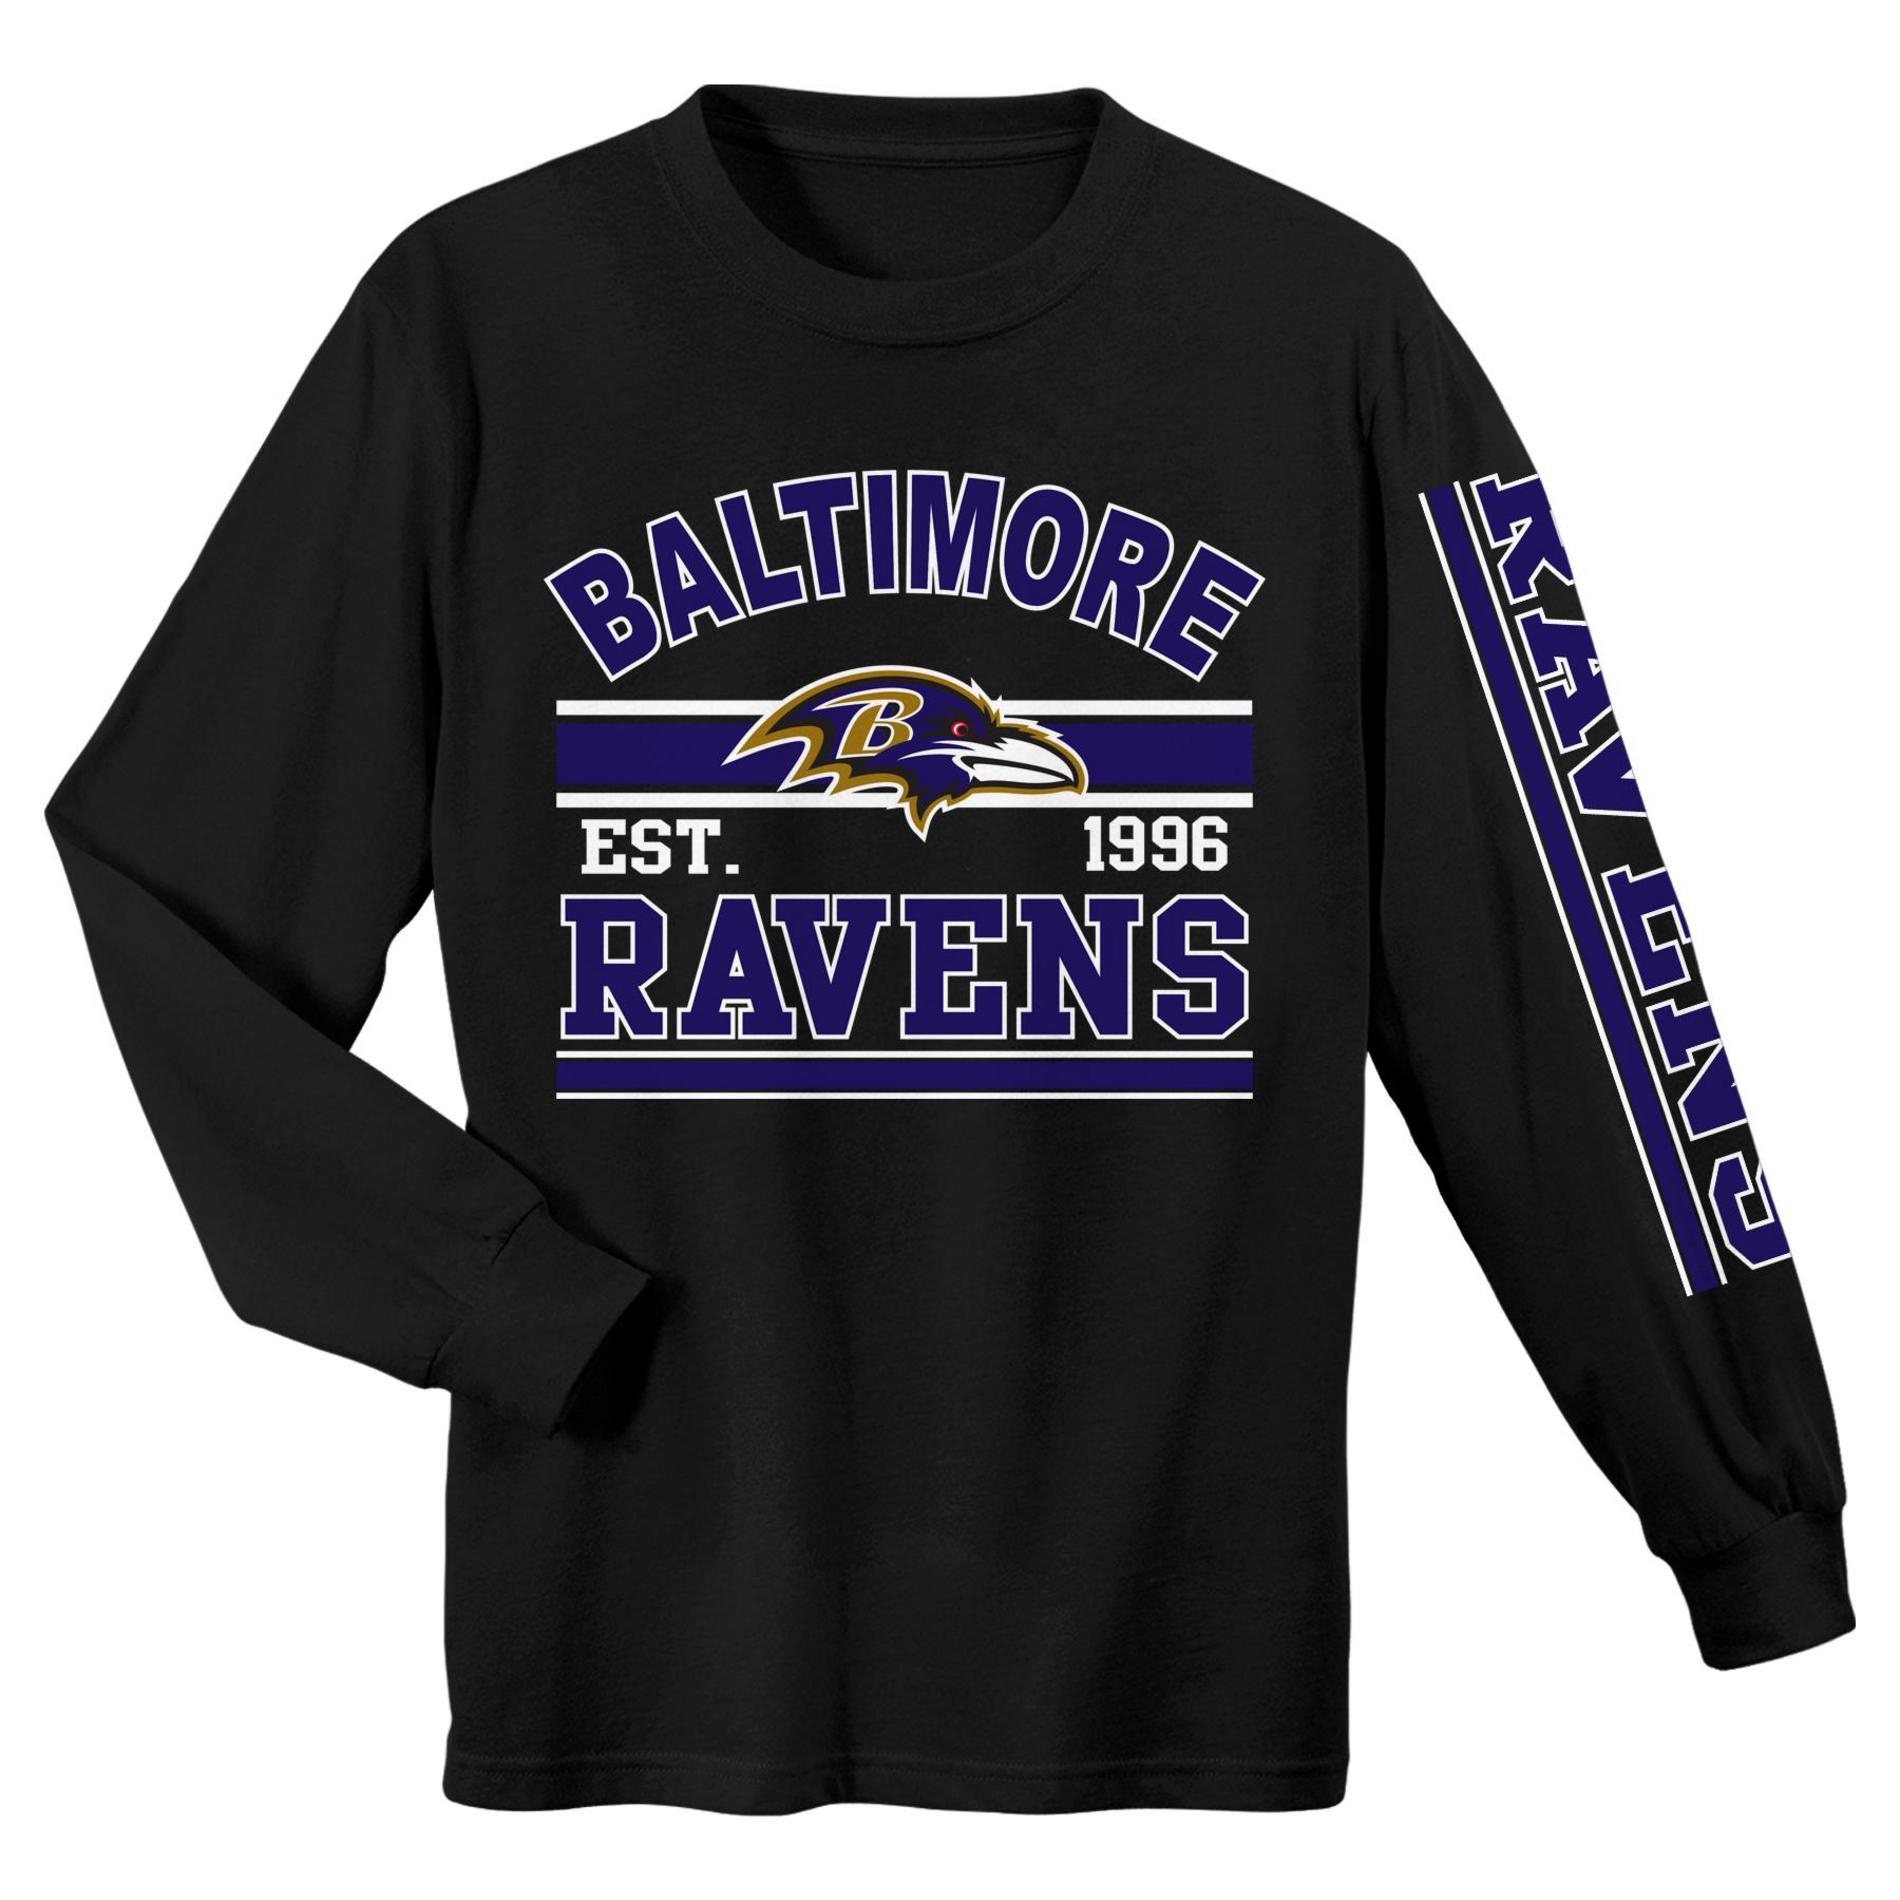 NFL Boys' Long-Sleeve Graphic T-Shirt - Baltimore Ravens